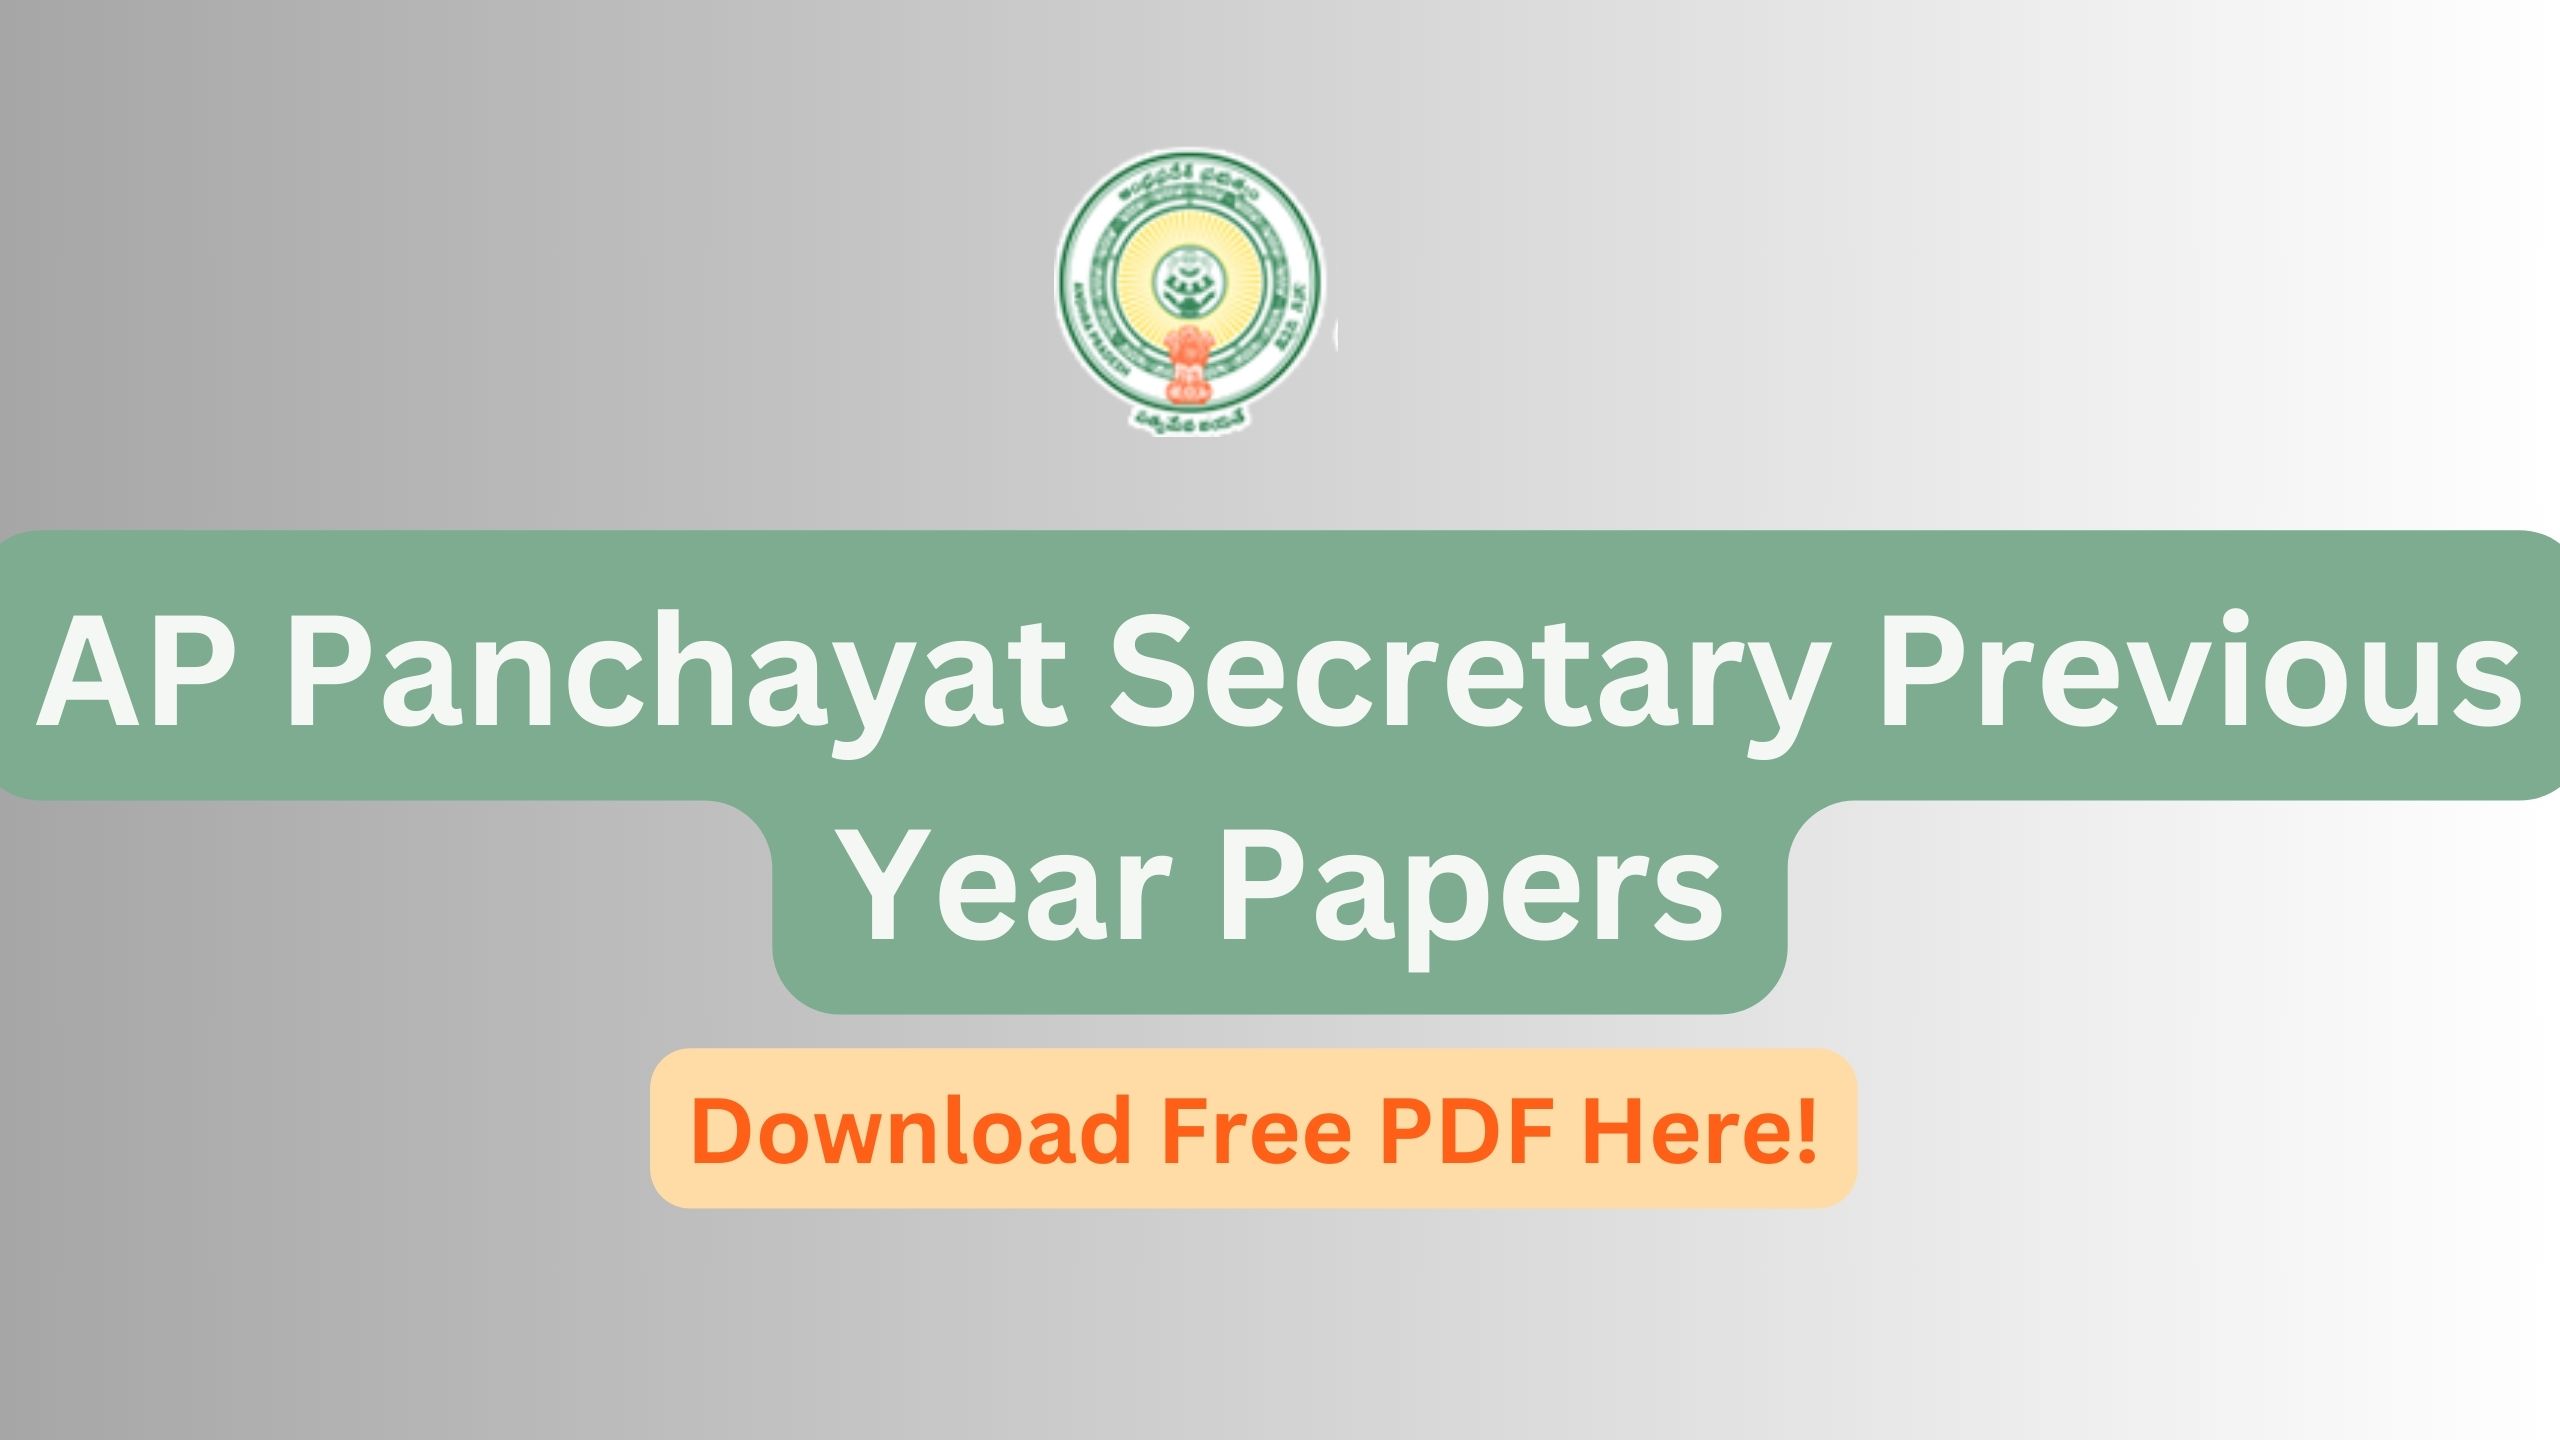 AP Panchayat Secretary Previous Year Papers